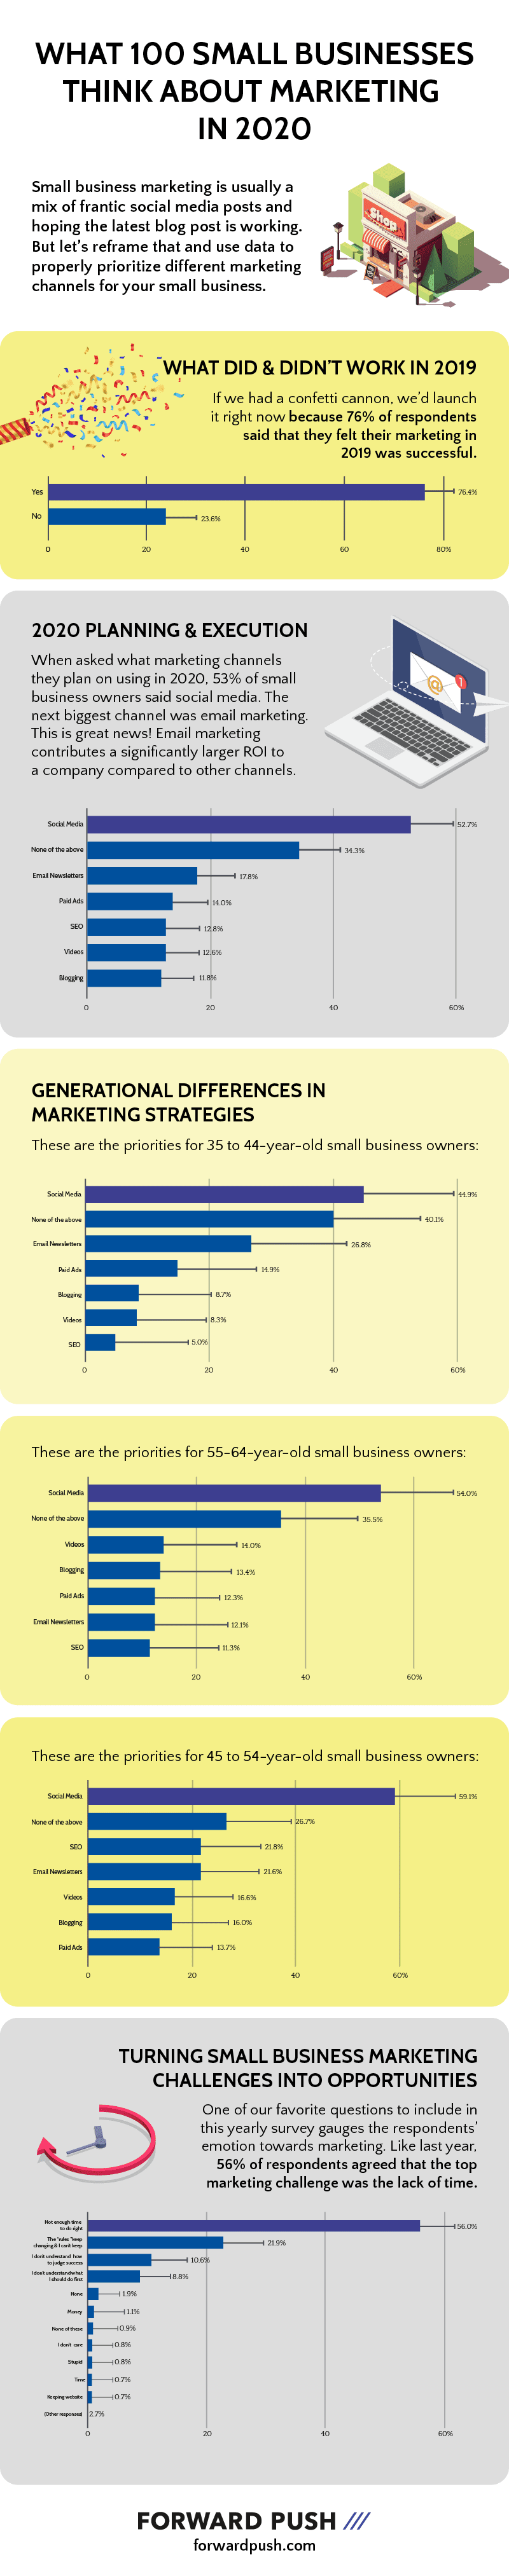 2020-marketing-survey-results